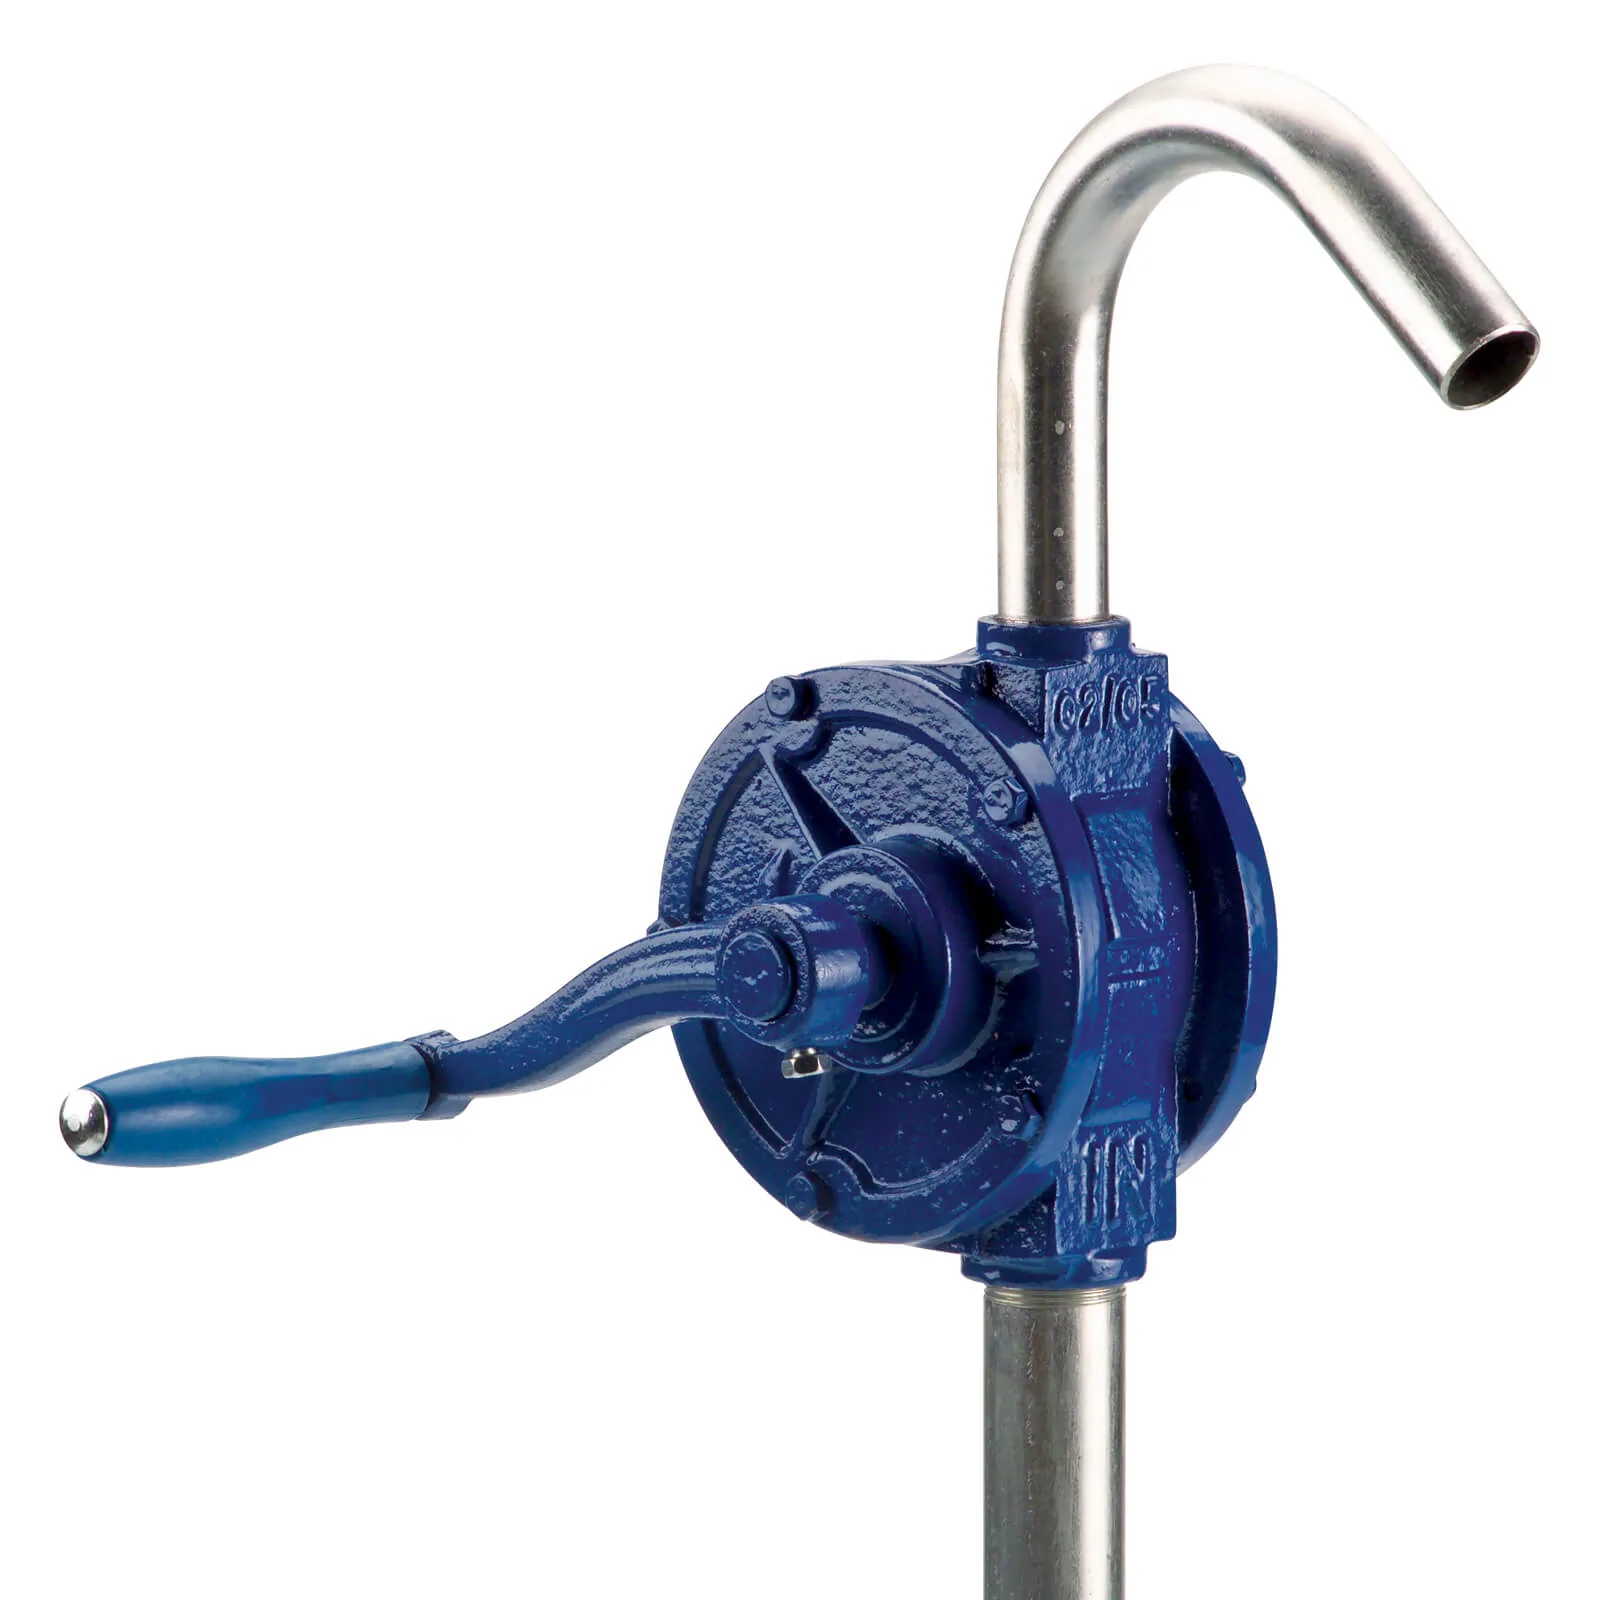 Model: RP-5 - Rotary Hand Pump